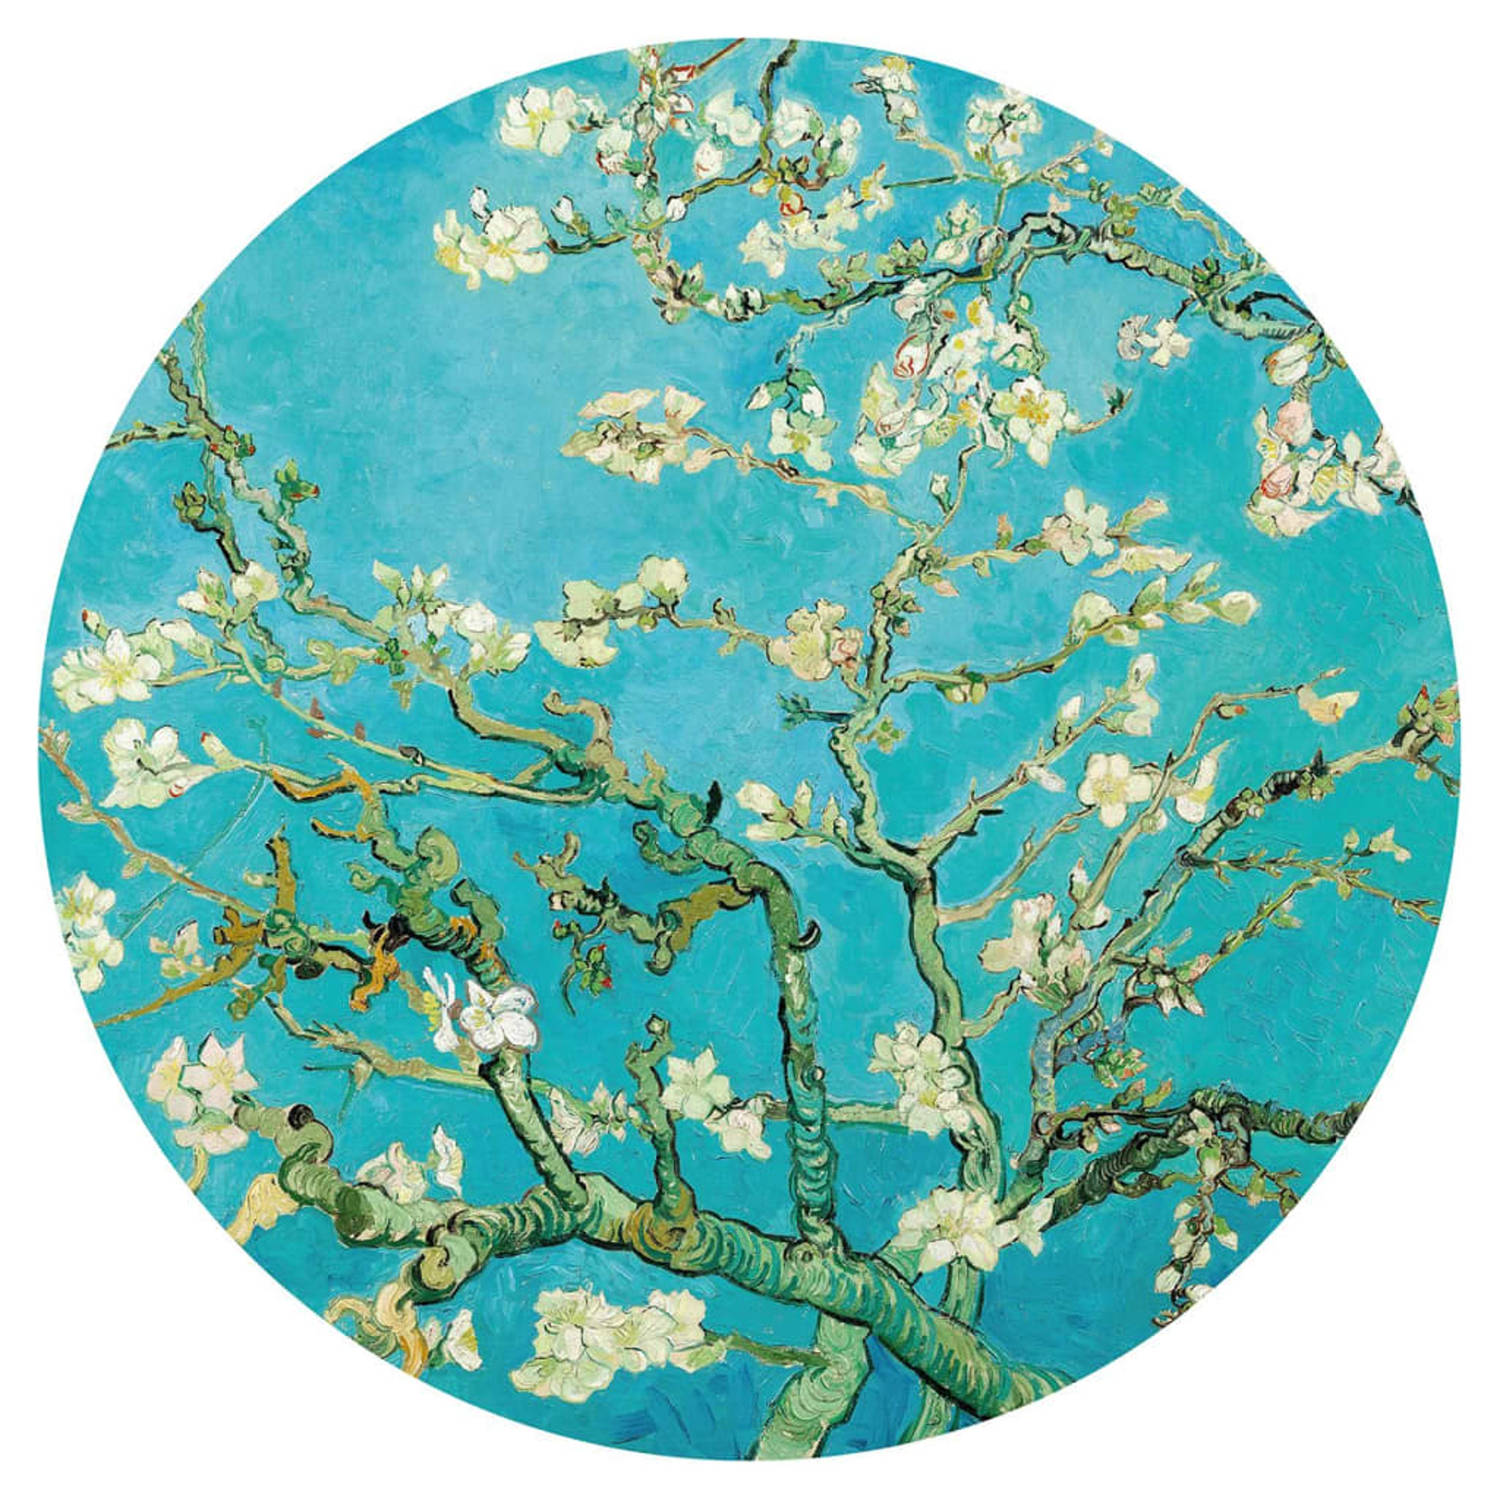 WallArt Behangcirkel Almond Blossom 190 cm